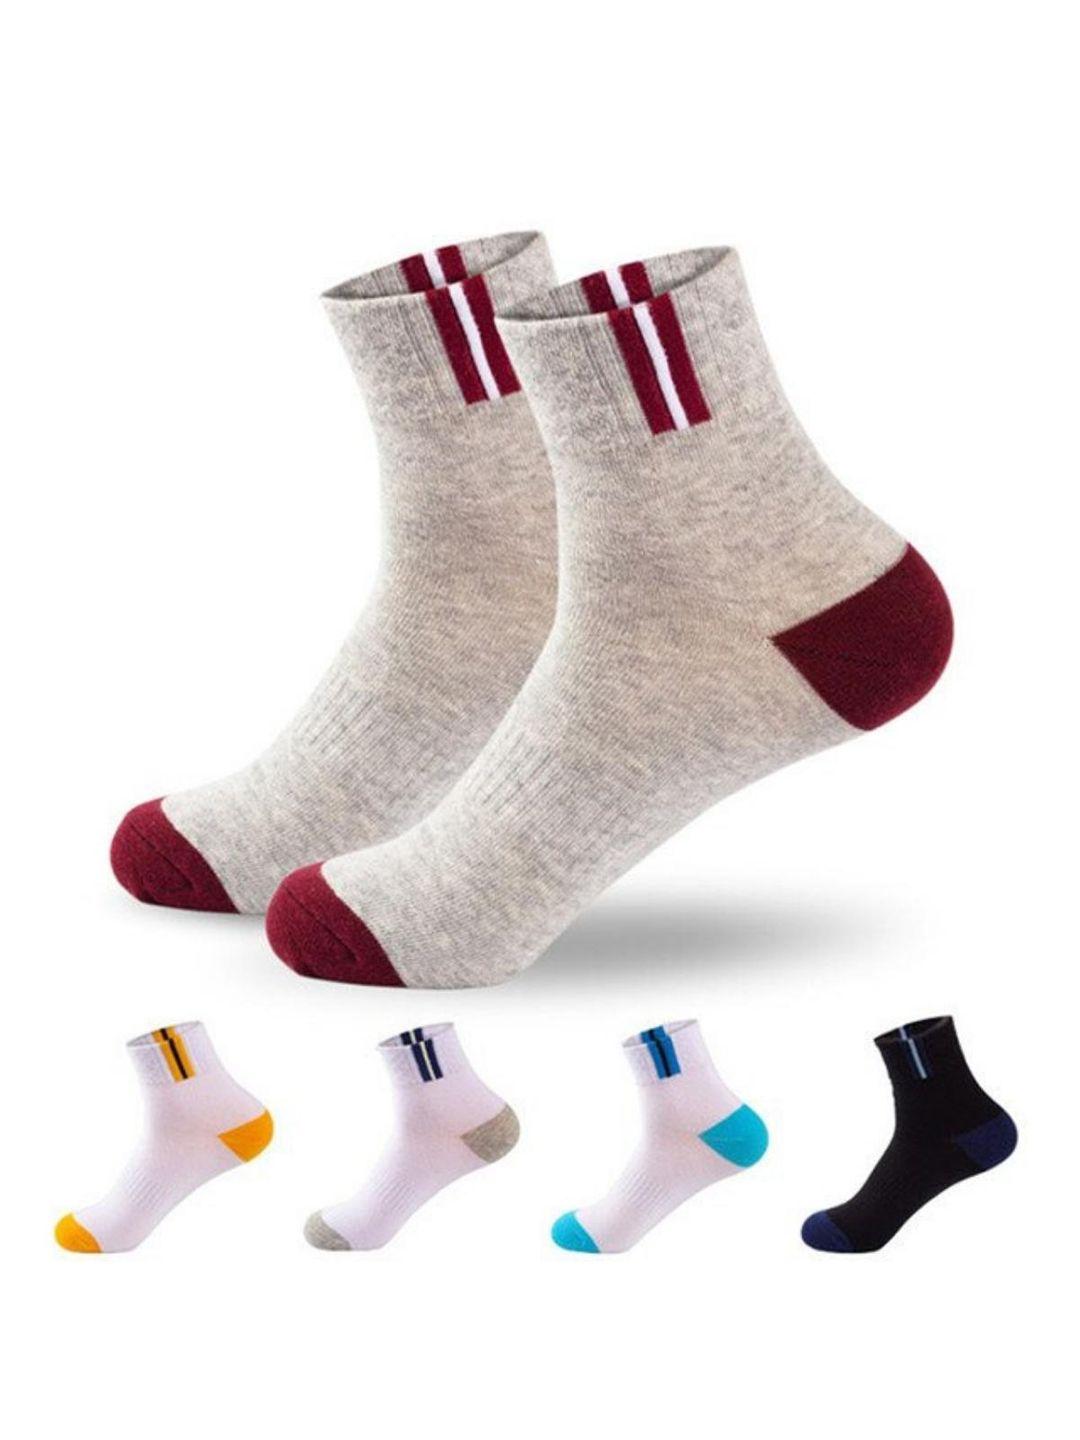 youstylo pack of 5 multi ankle length socks